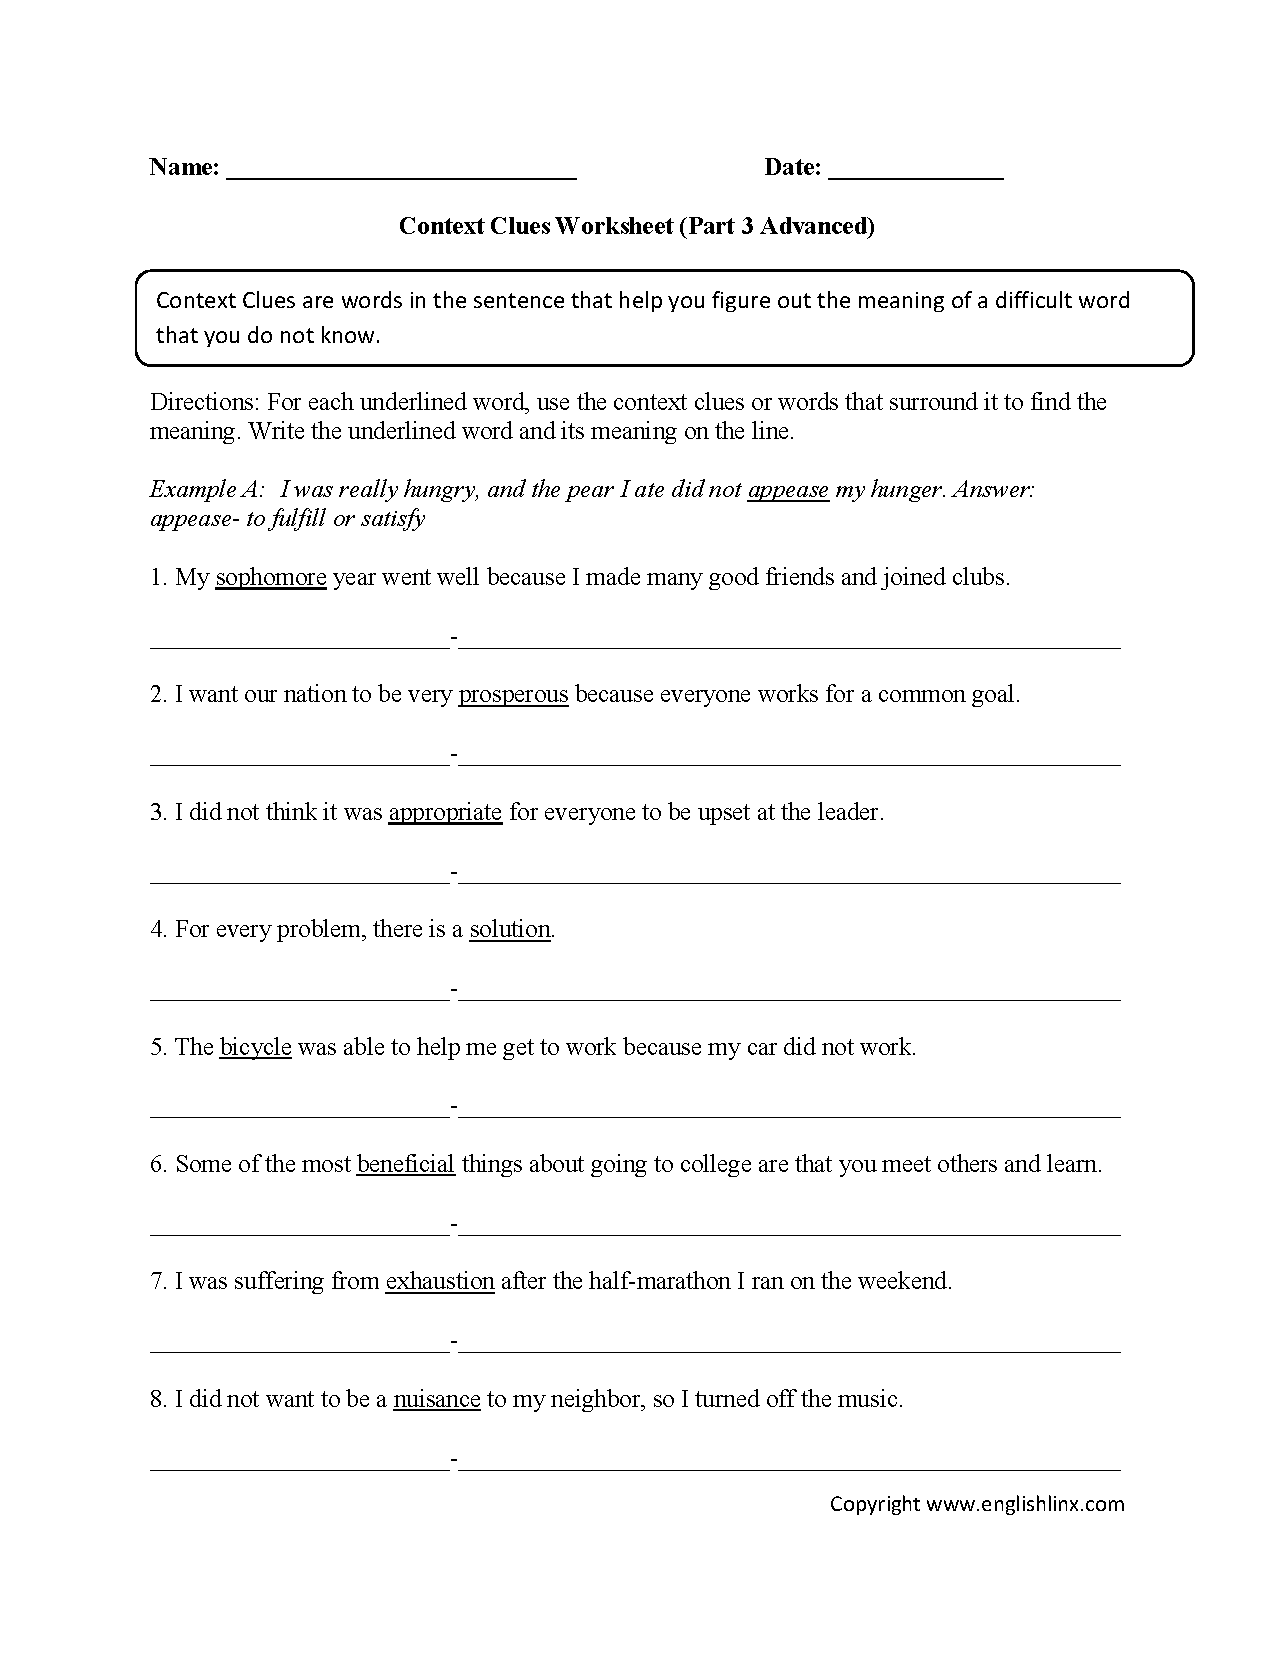 Context Clues Worksheets Part 3 Advanced